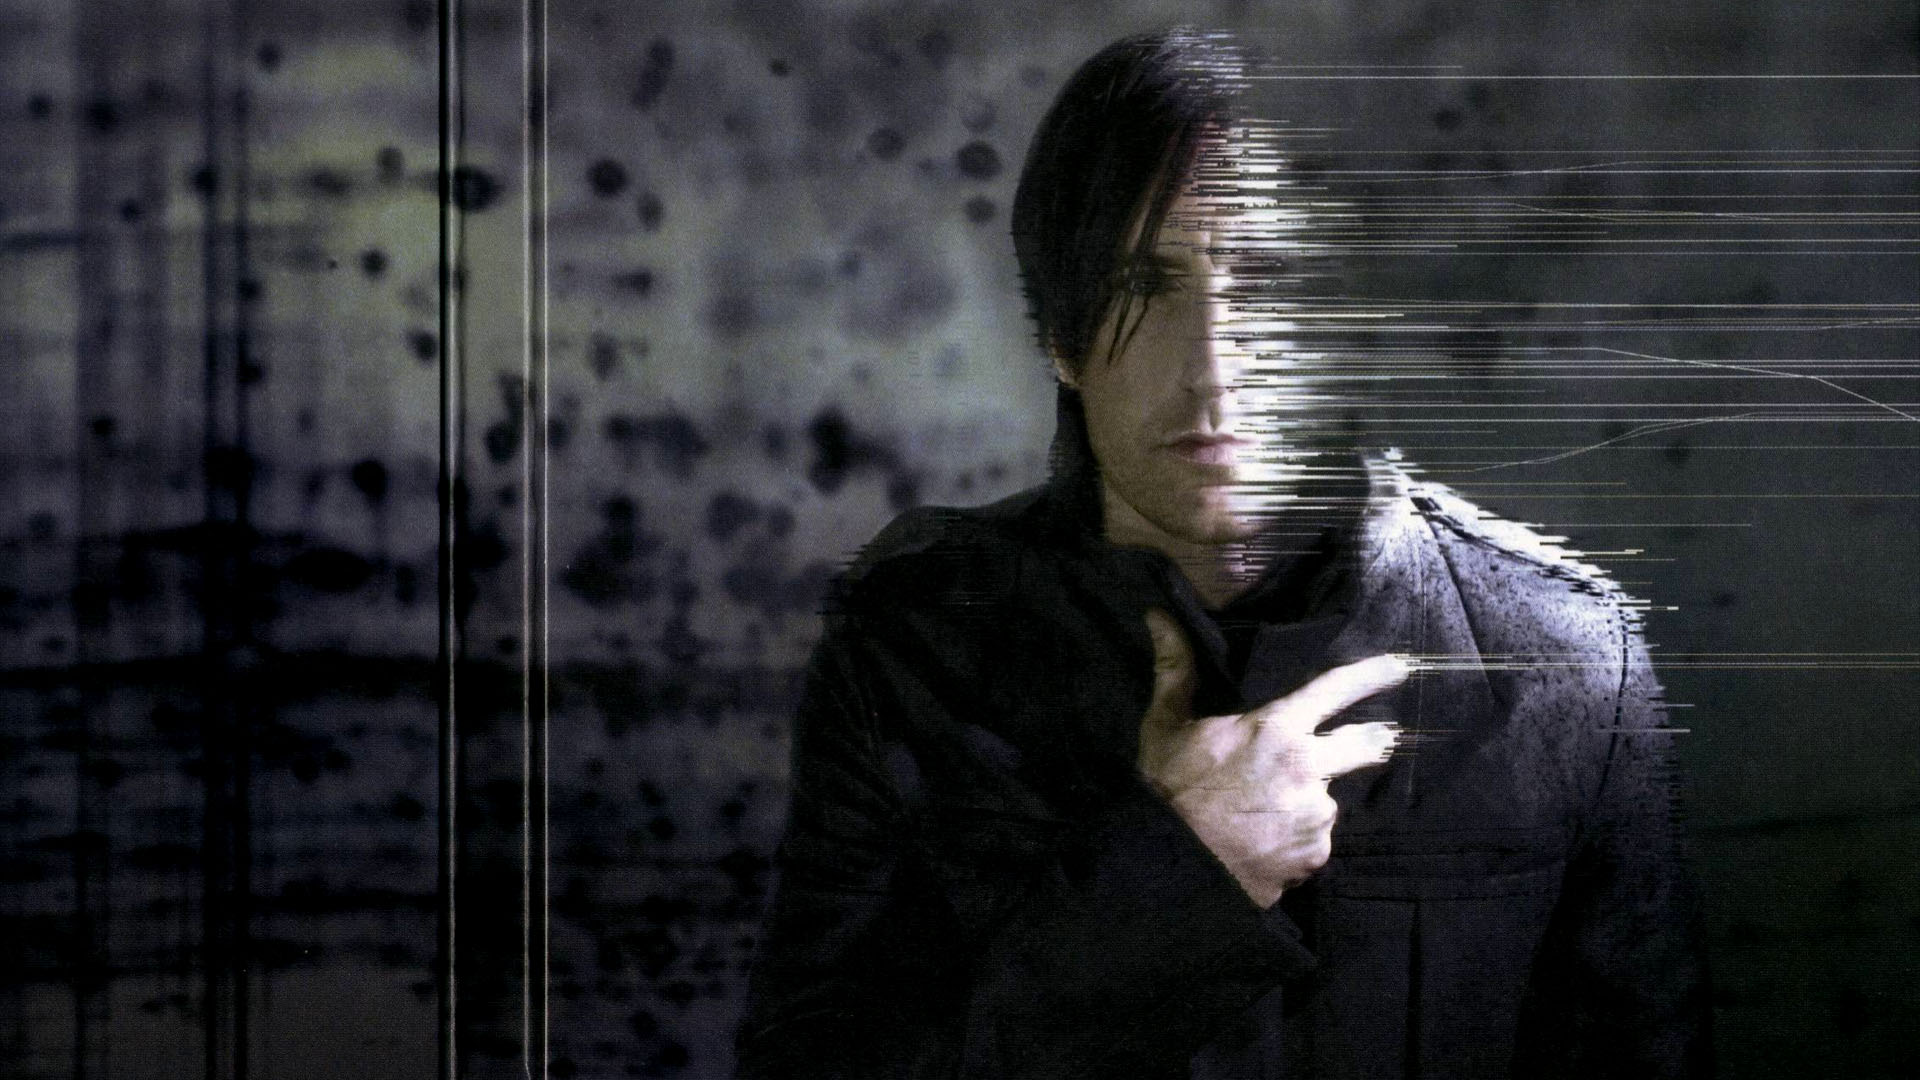 Nine Inch Nails Wallpaper HD